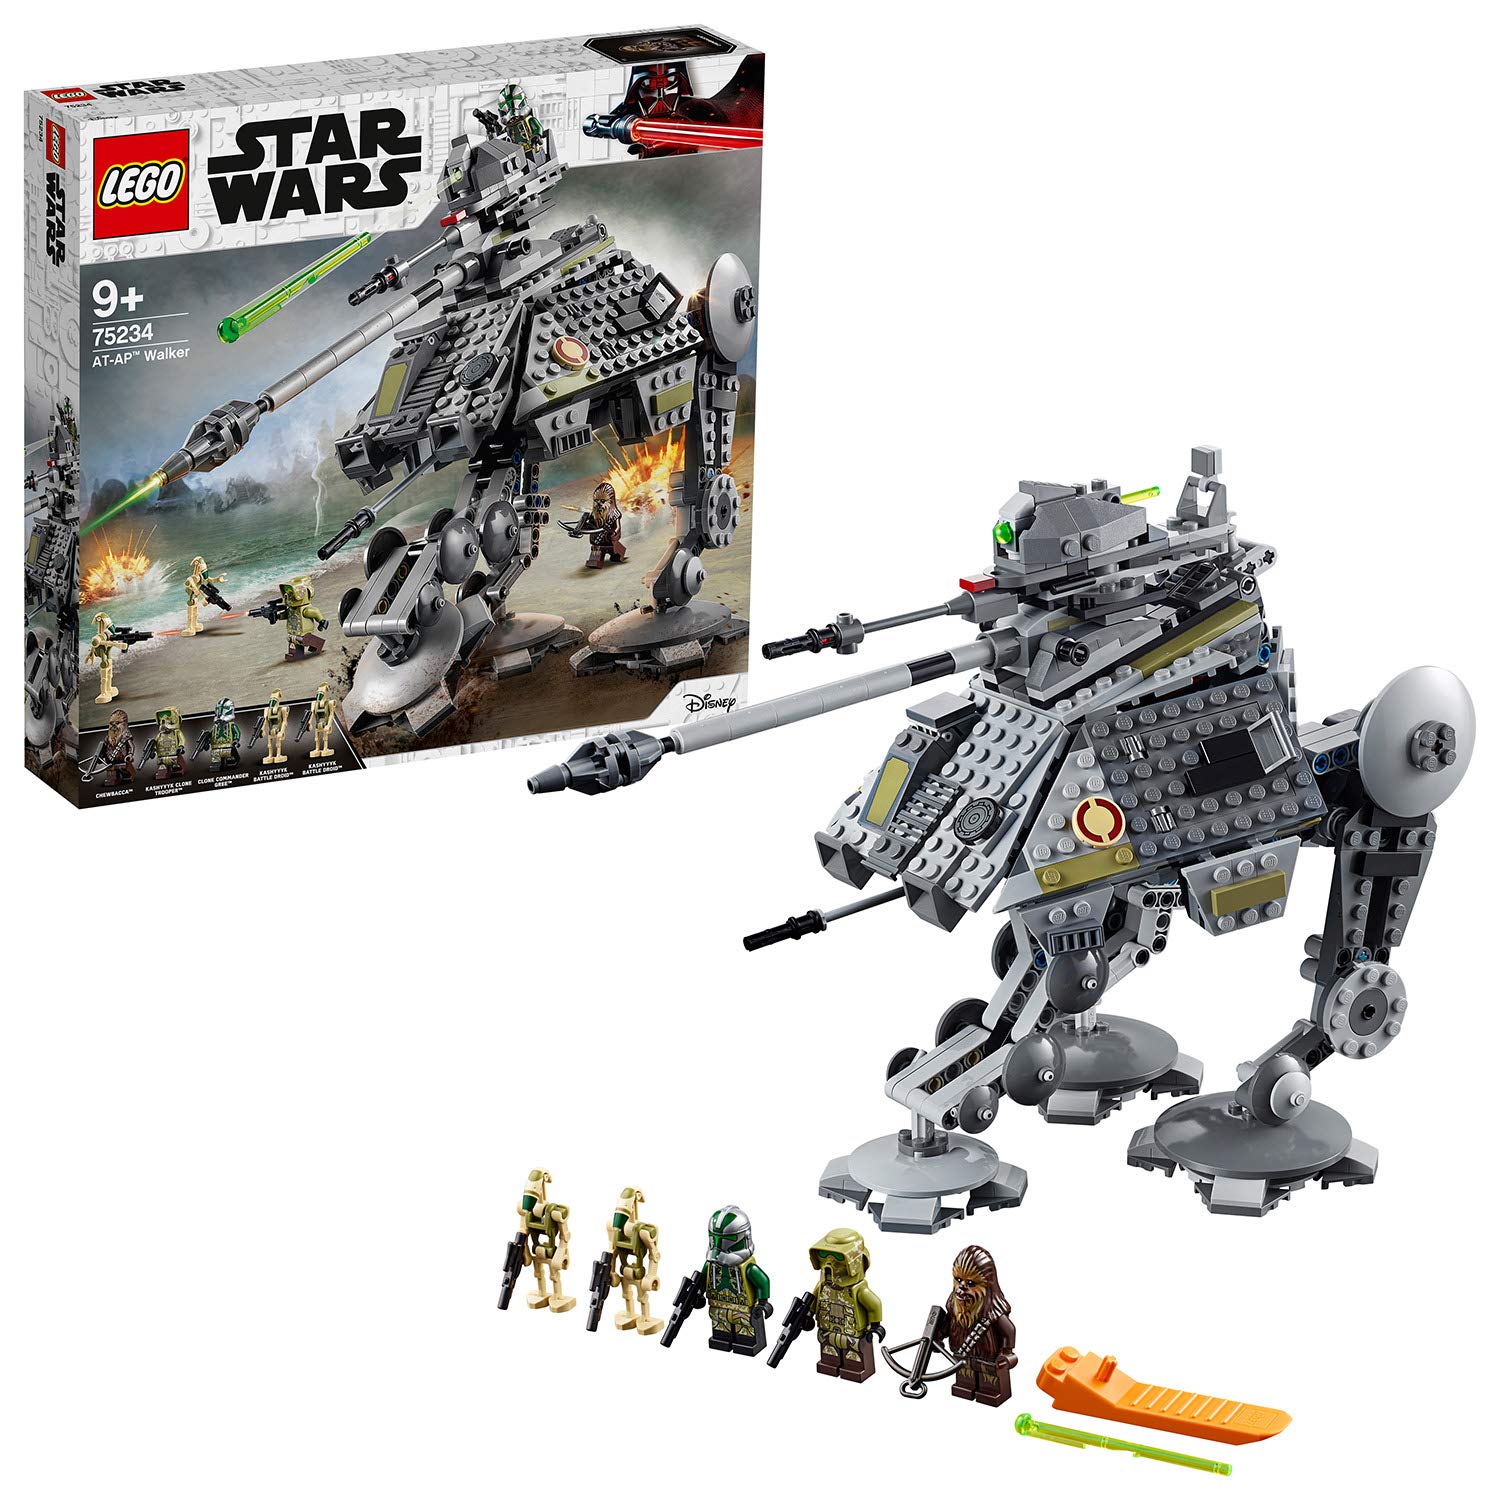 Lego Star Wars 75234 At-Ap Walker, Toy